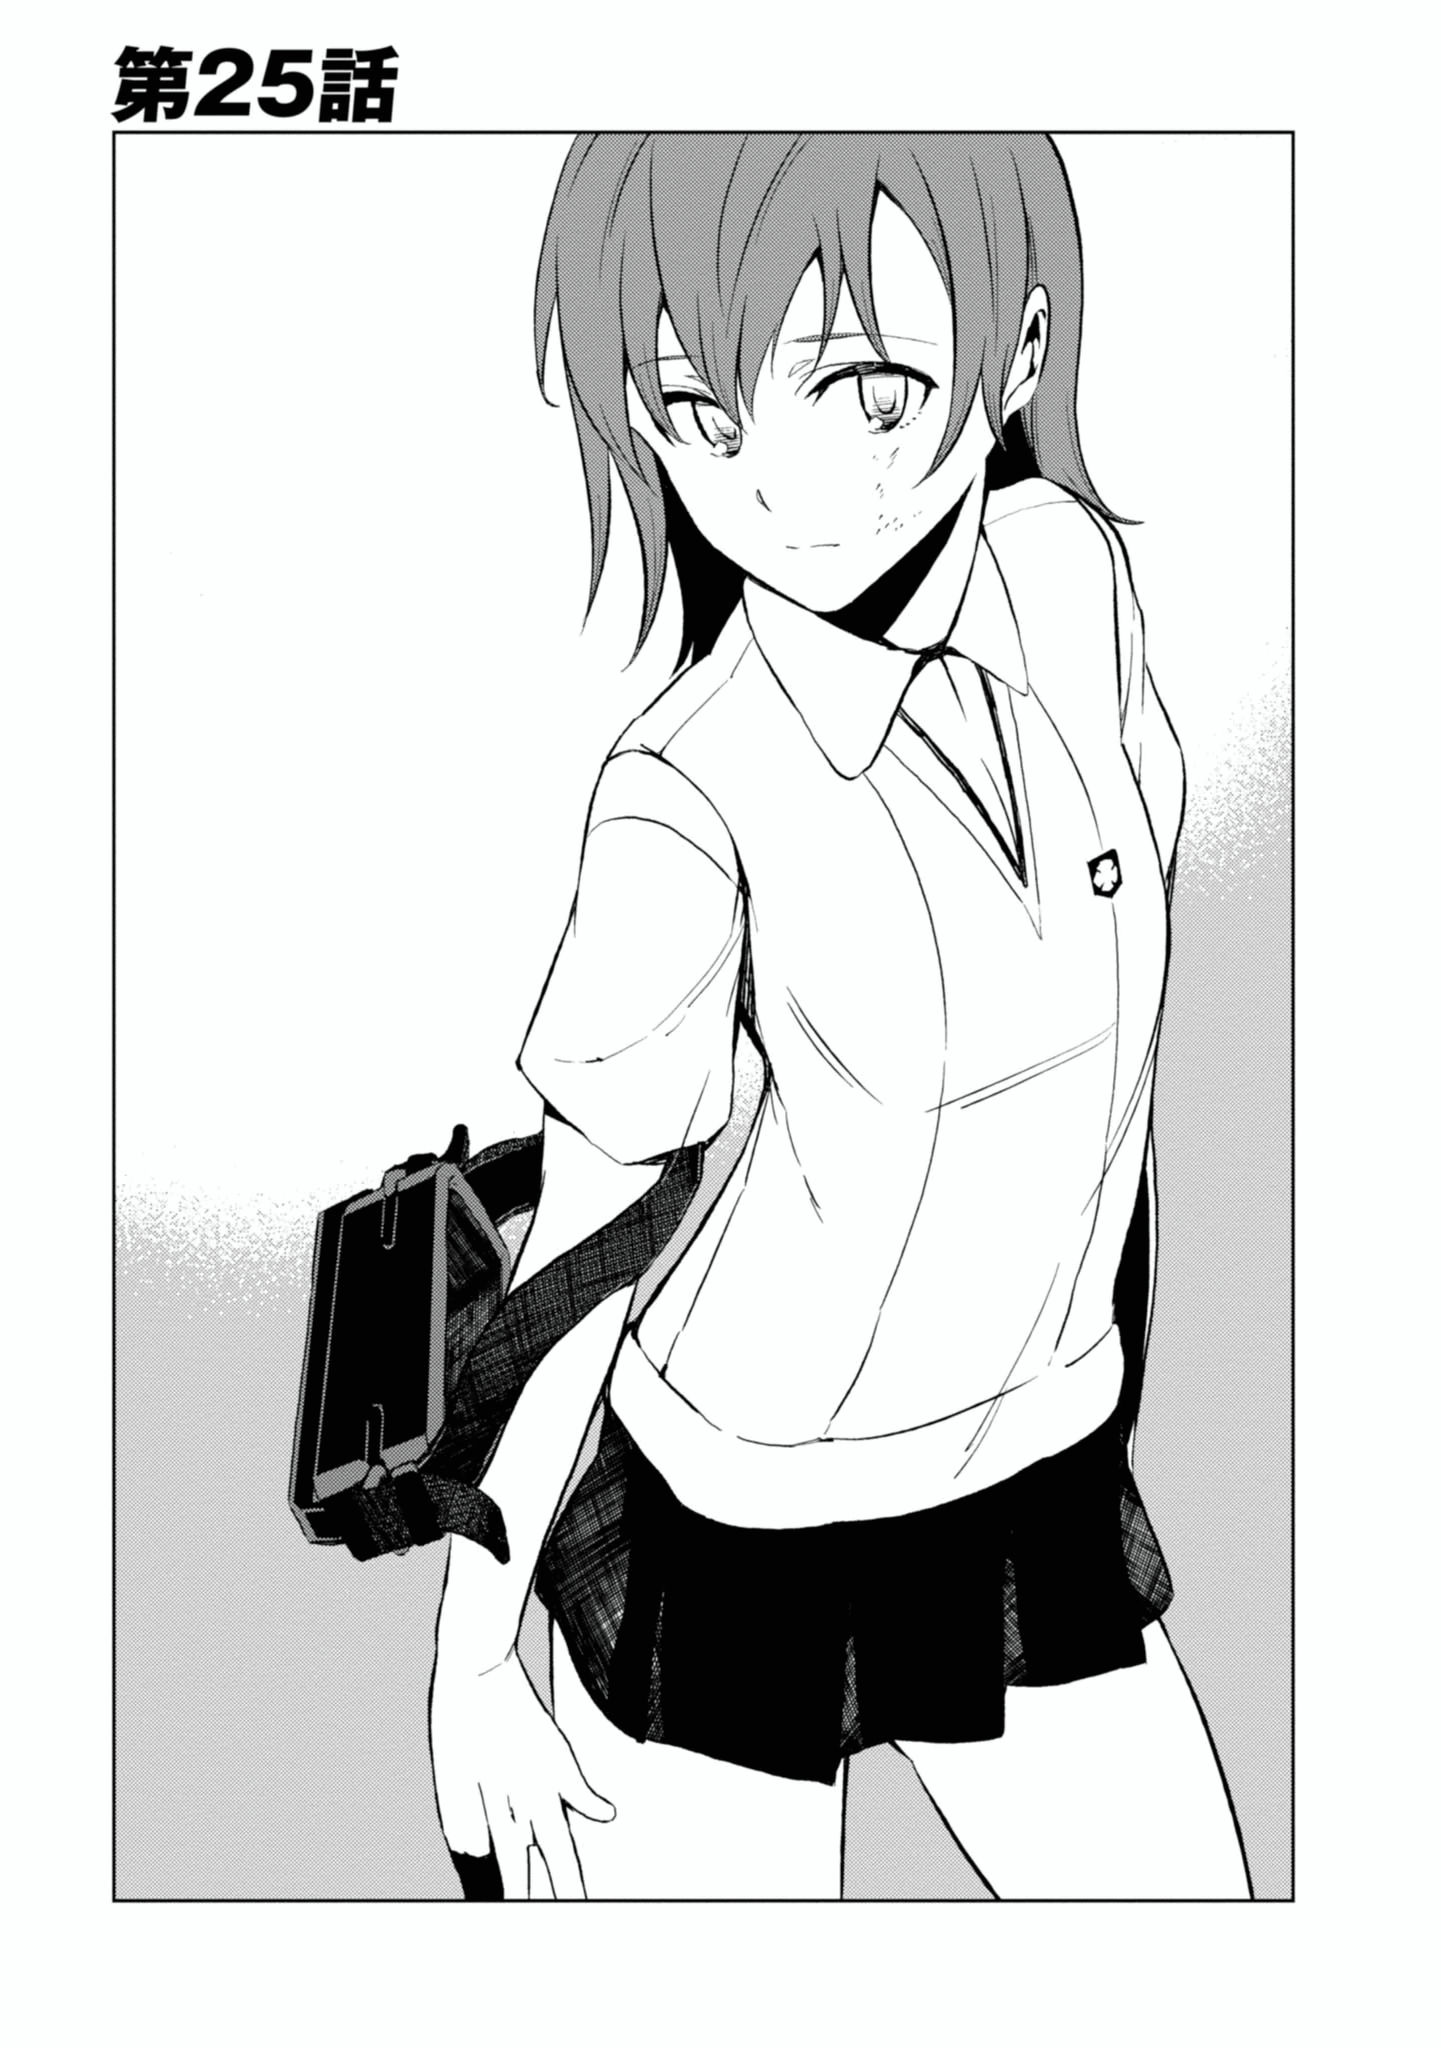 Licensed To Aru Kagaku no Accelerator - Manga Discussion - Page 43 -  AnimeSuki Forum